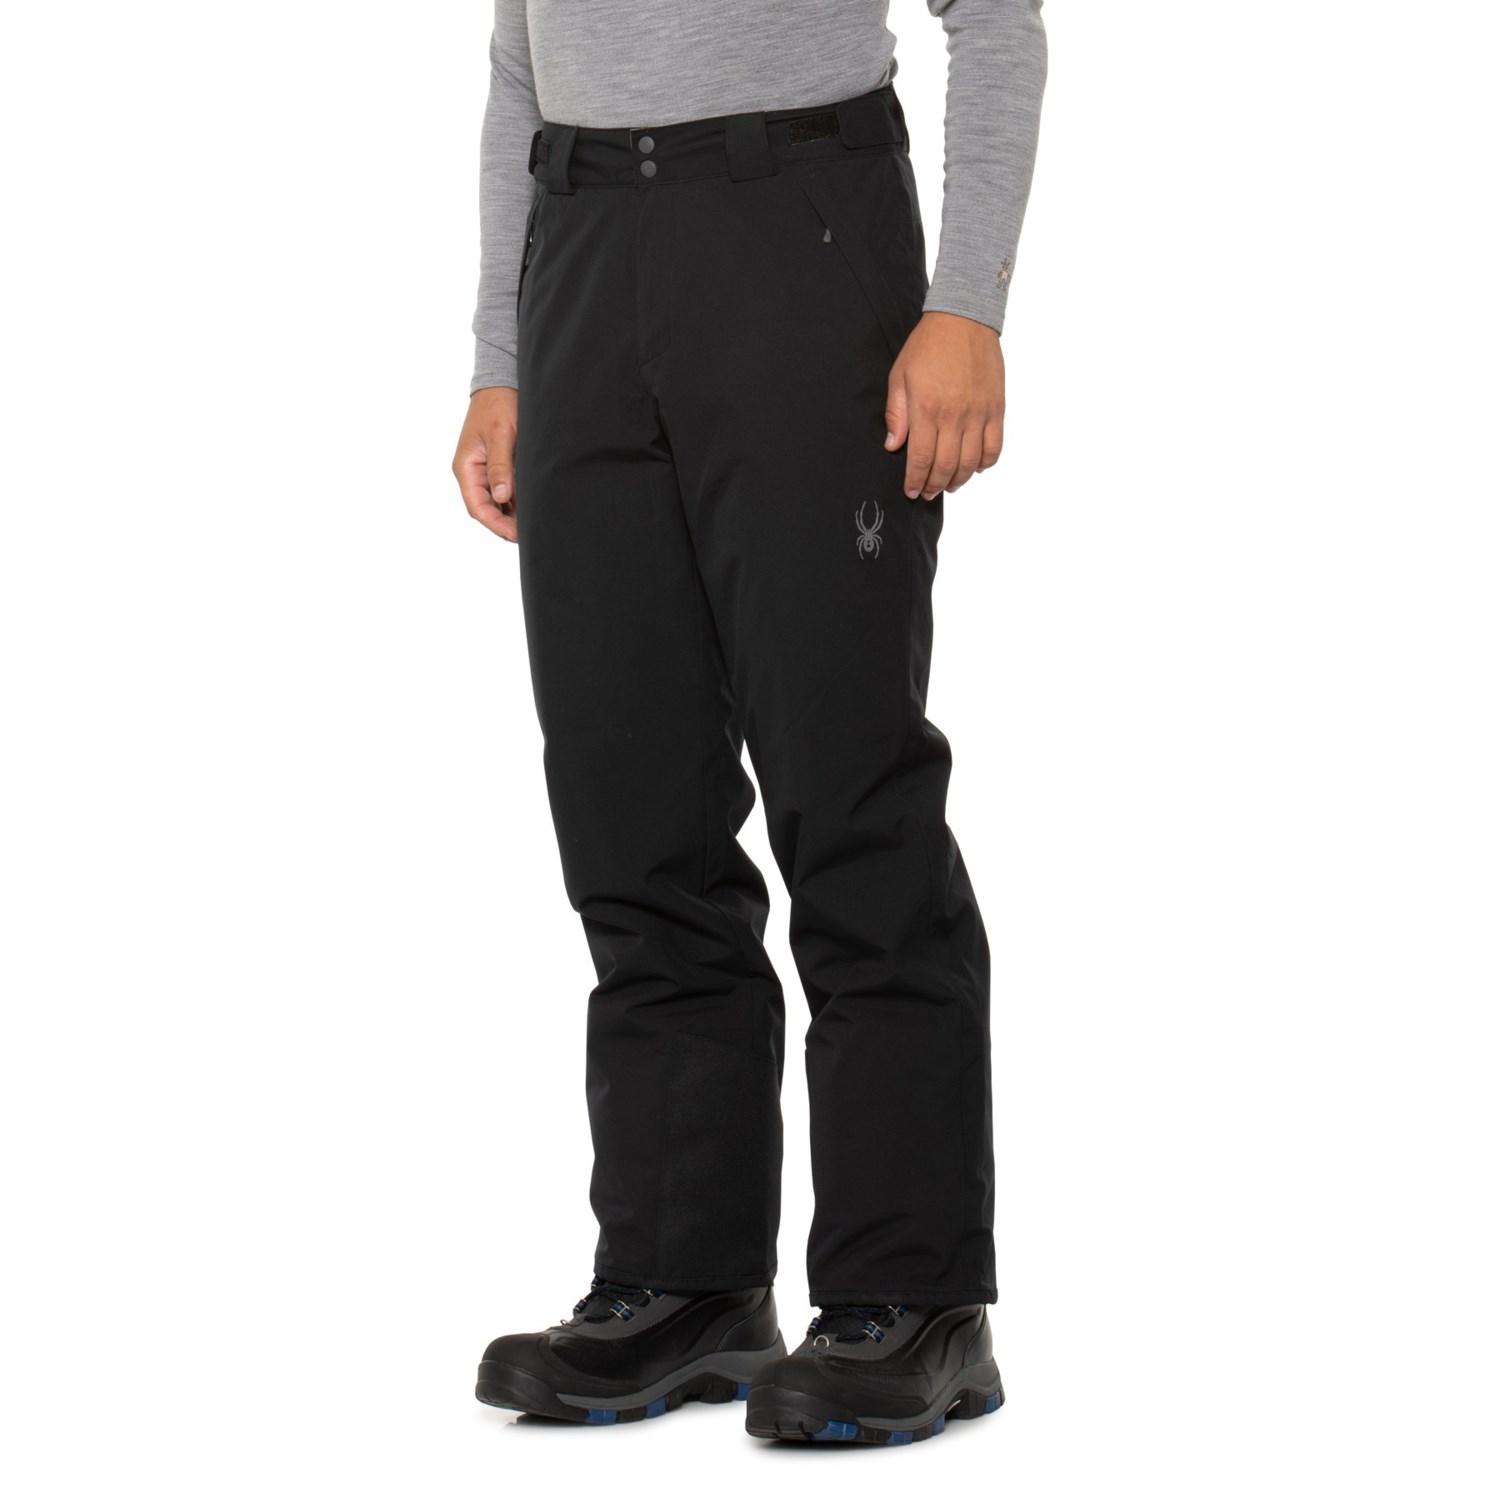 Spyder Mesa Thinsulate® Ski Pants - Insulated